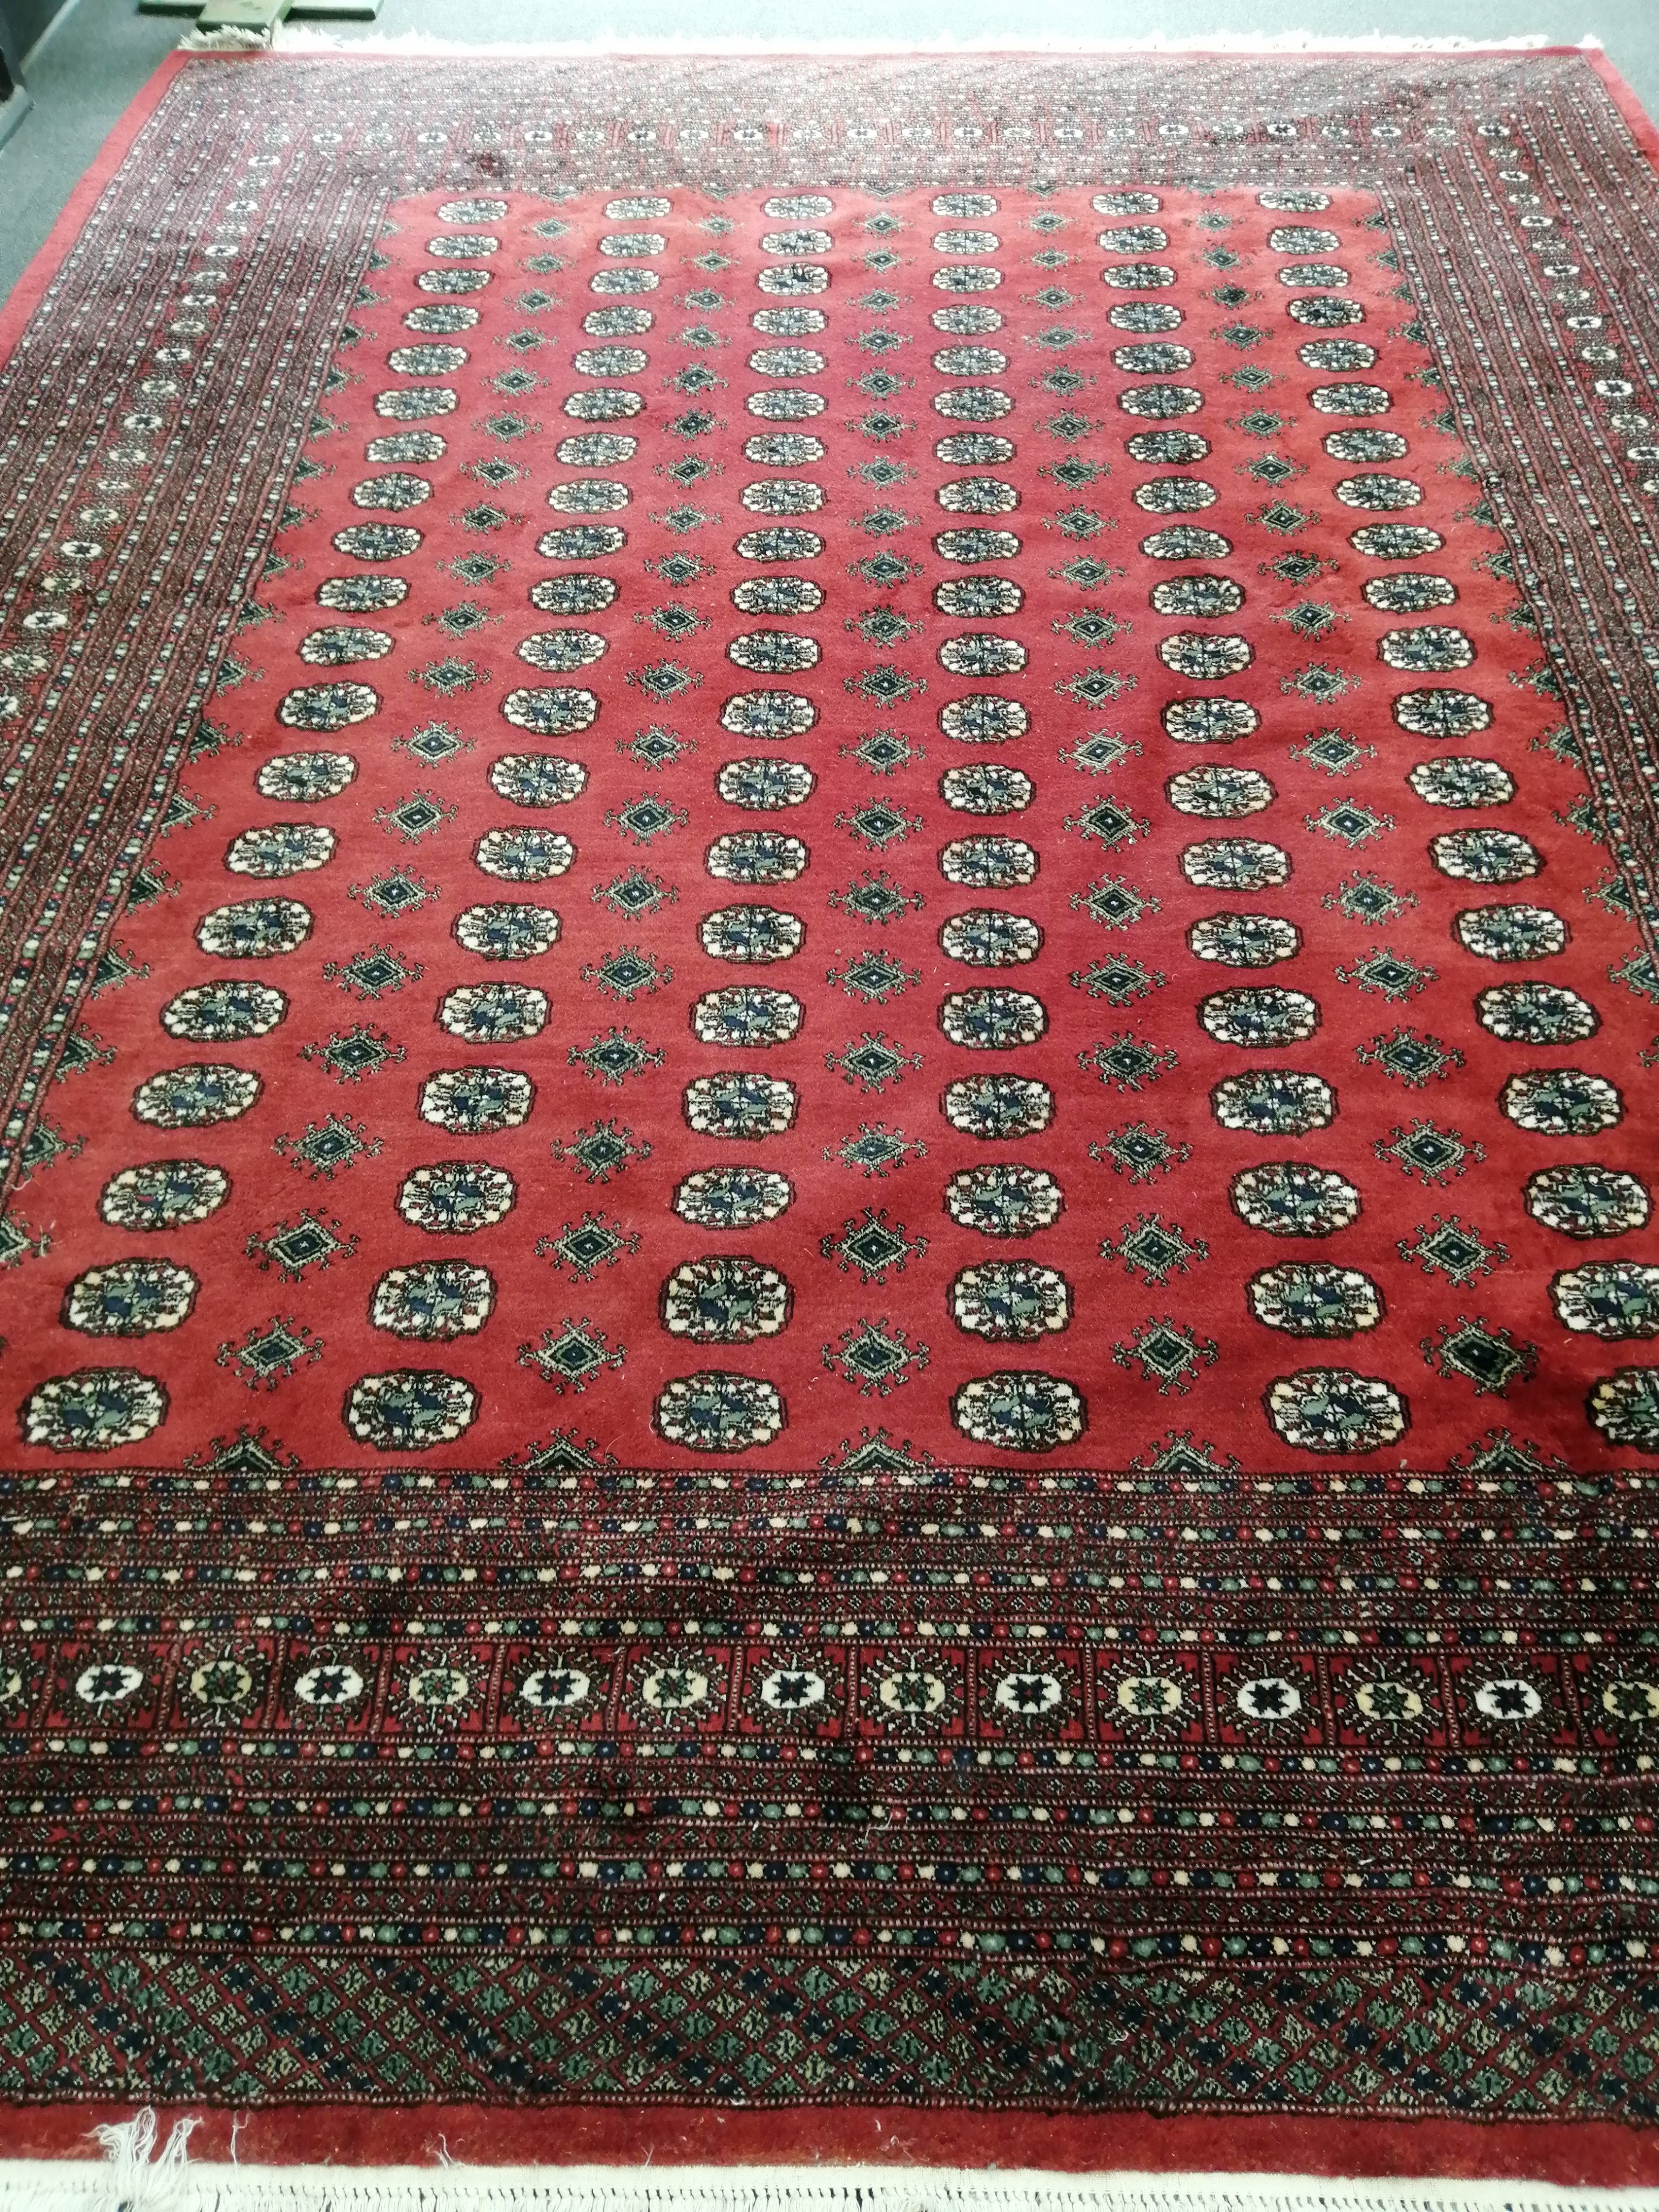 A Bokhara red ground carpet, 360 x 284cm